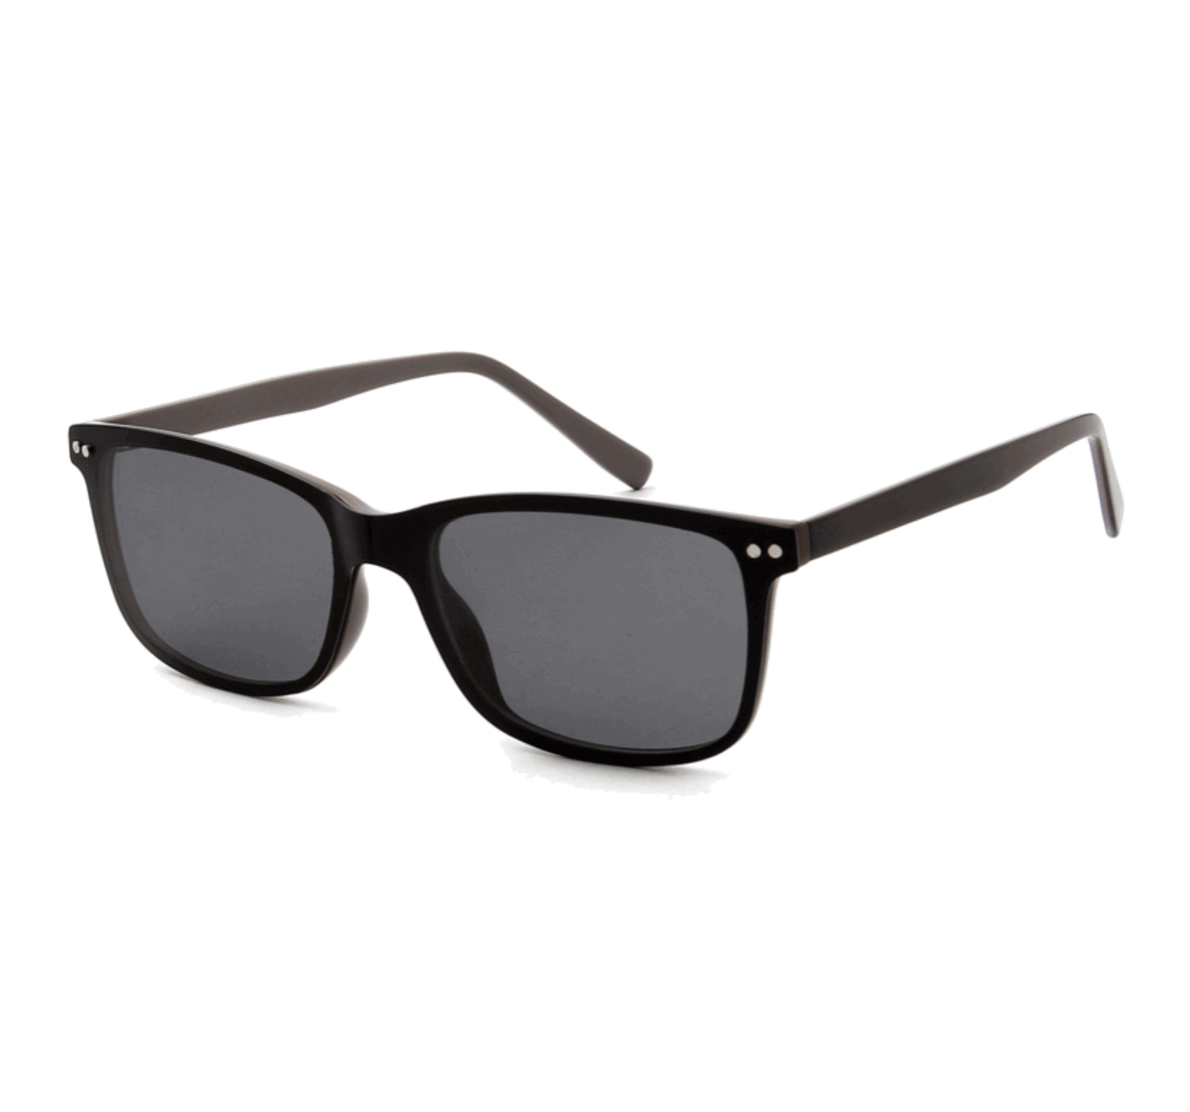 Wholesale mens acetate sunglasses, wholesale acetate sunglasses, acetate sunglasses manufacturer, Wholesale sunglasses vendors, sunglasses supplier, Sunglasses Manufacturer in China